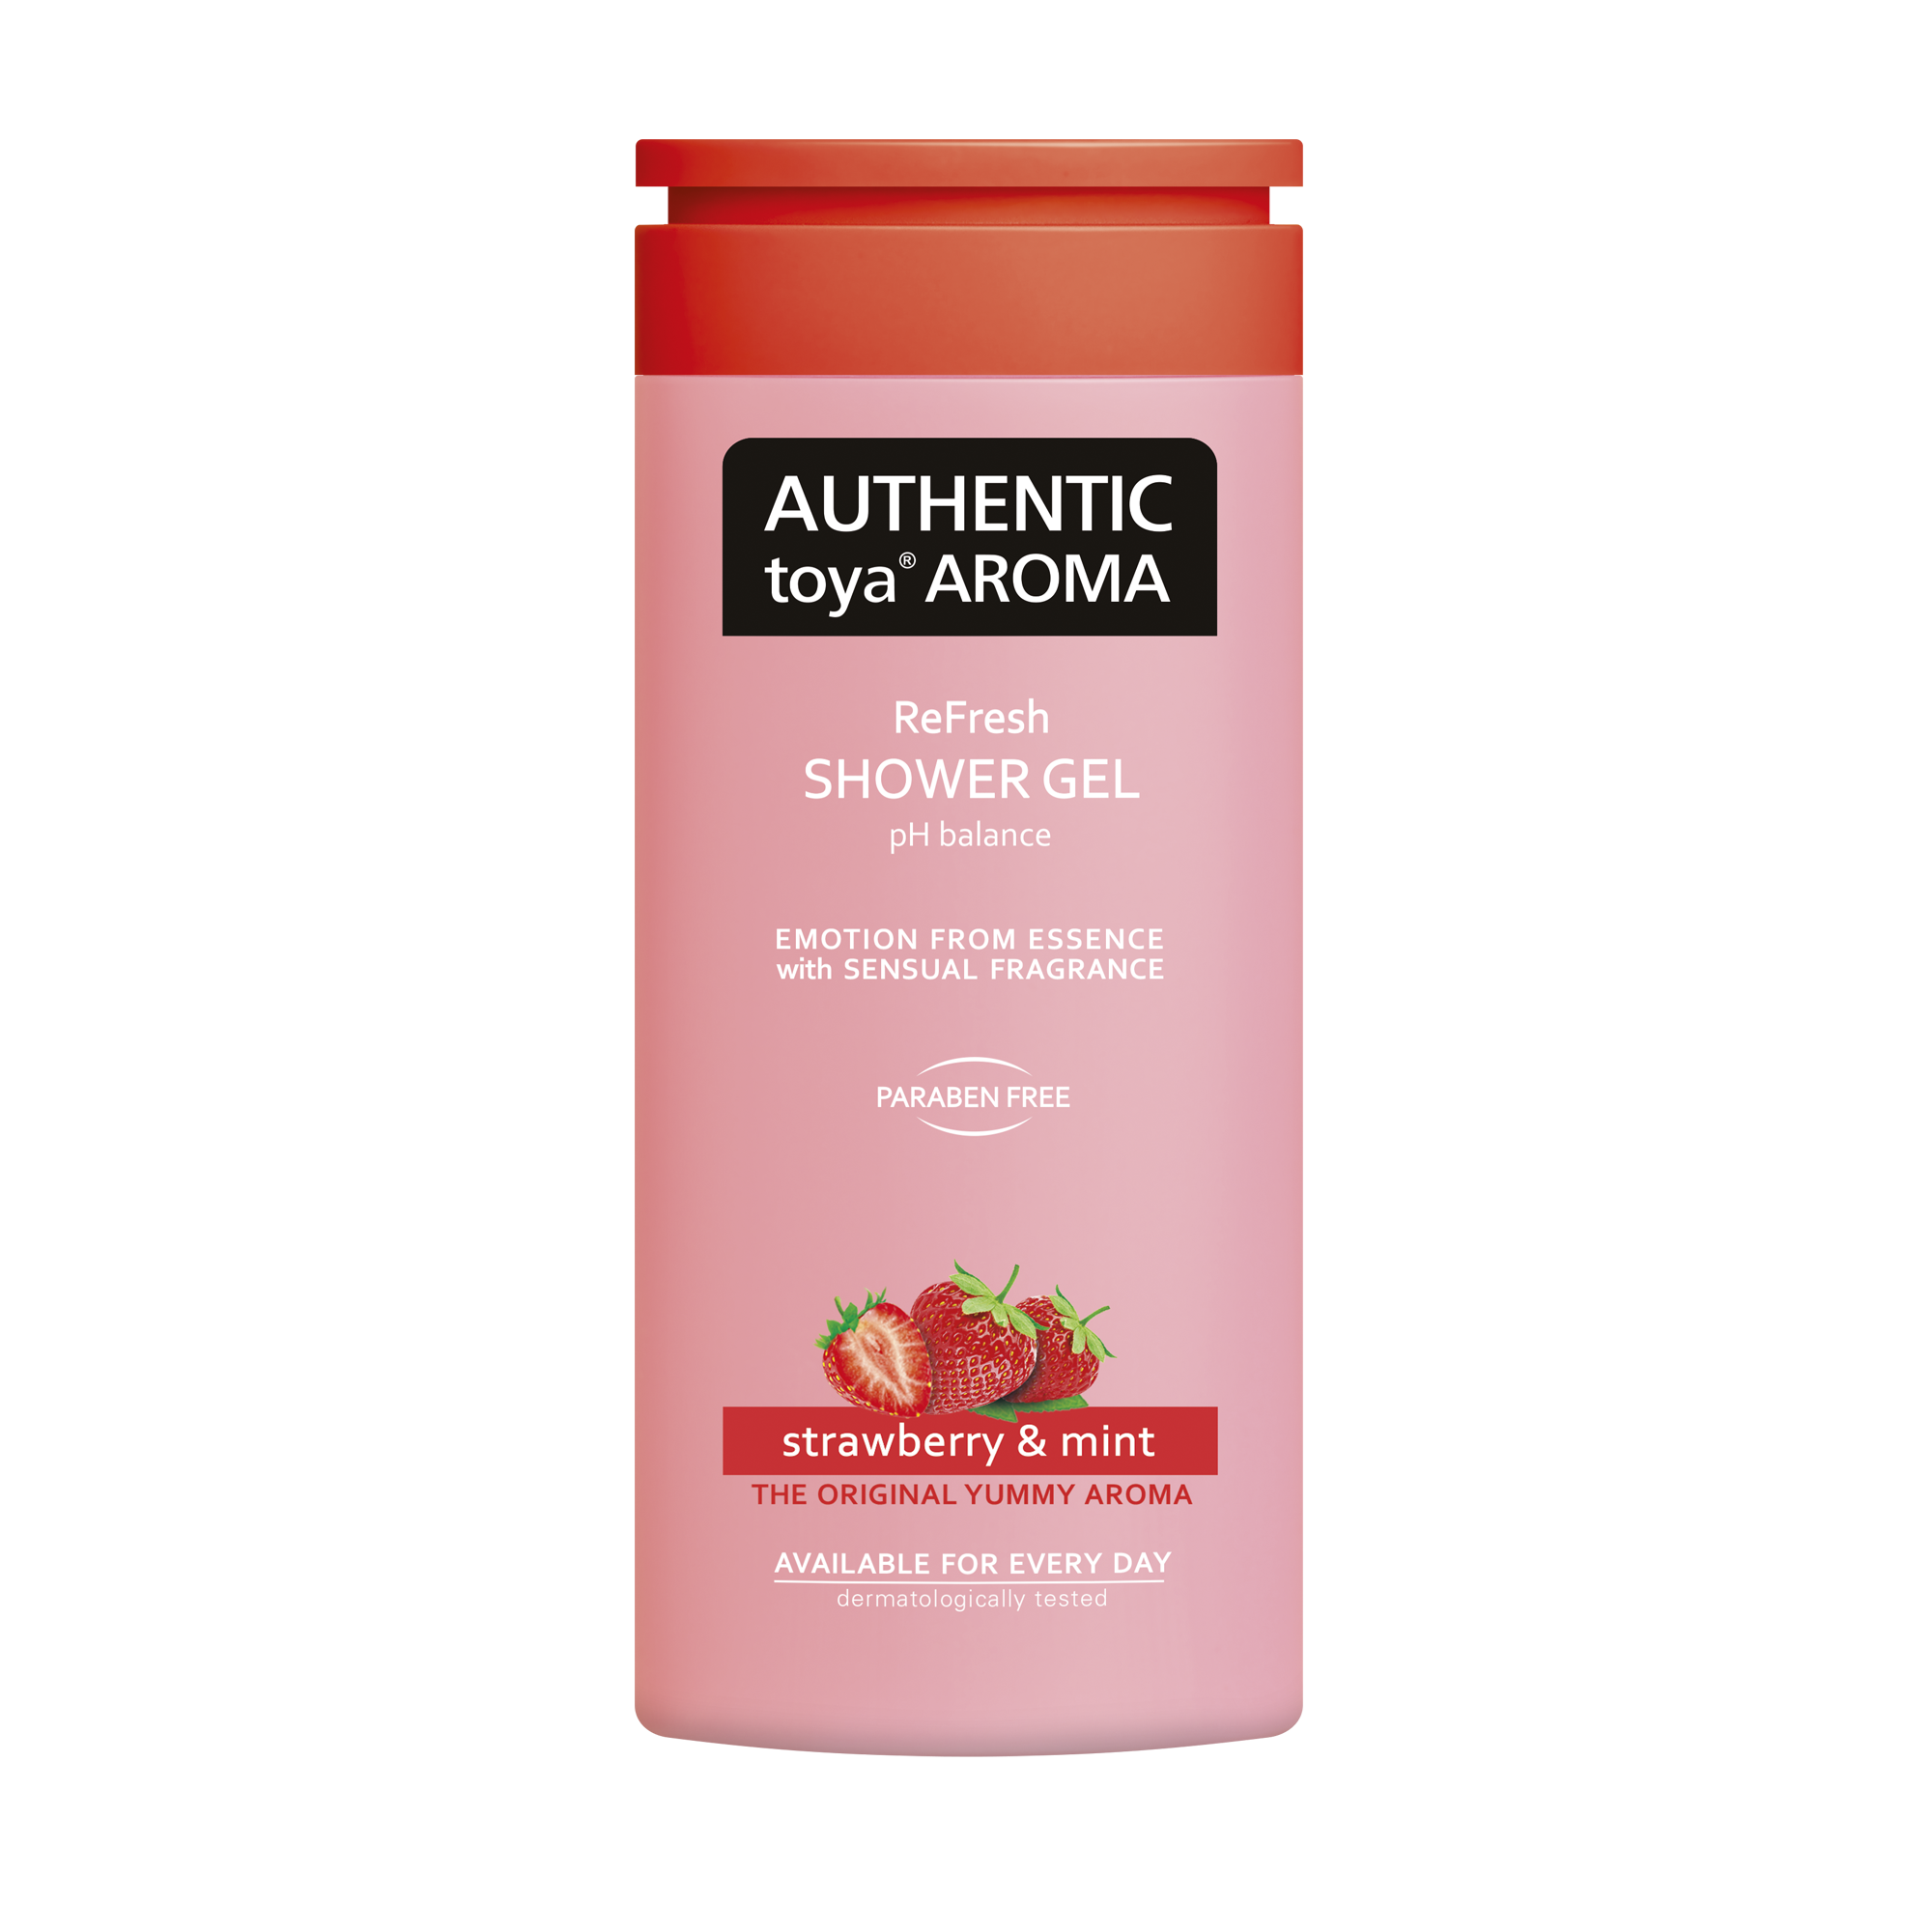 AUTHENTIC toya AROMA strawberry & mint shower gel